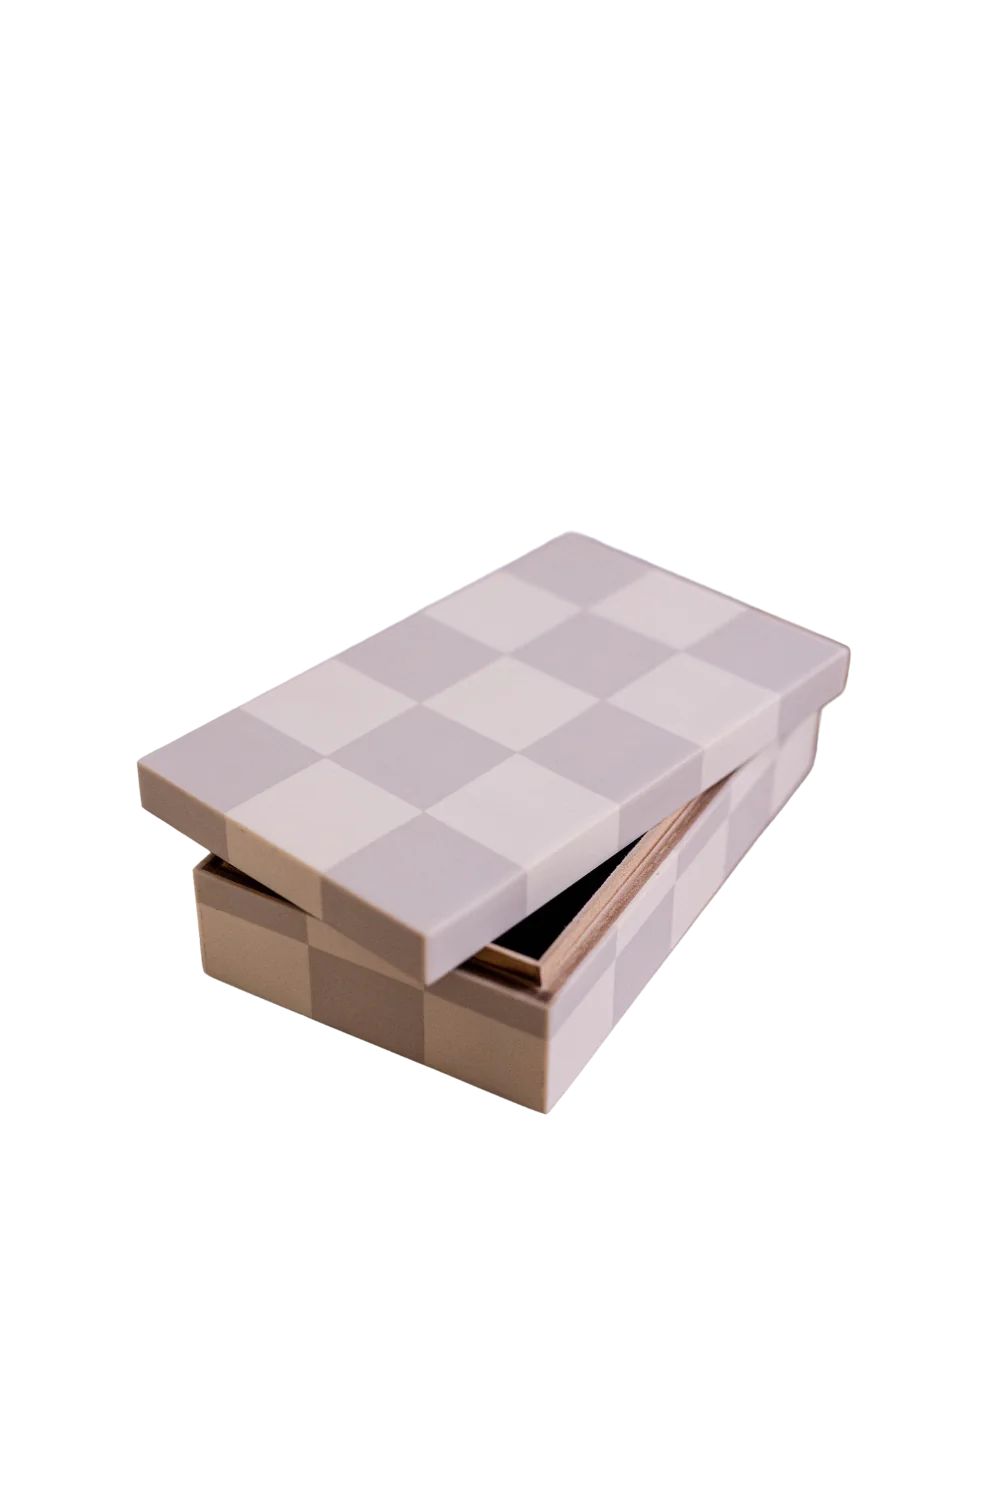 Checkered Gray & Off White Decor Box | Luxe B Co